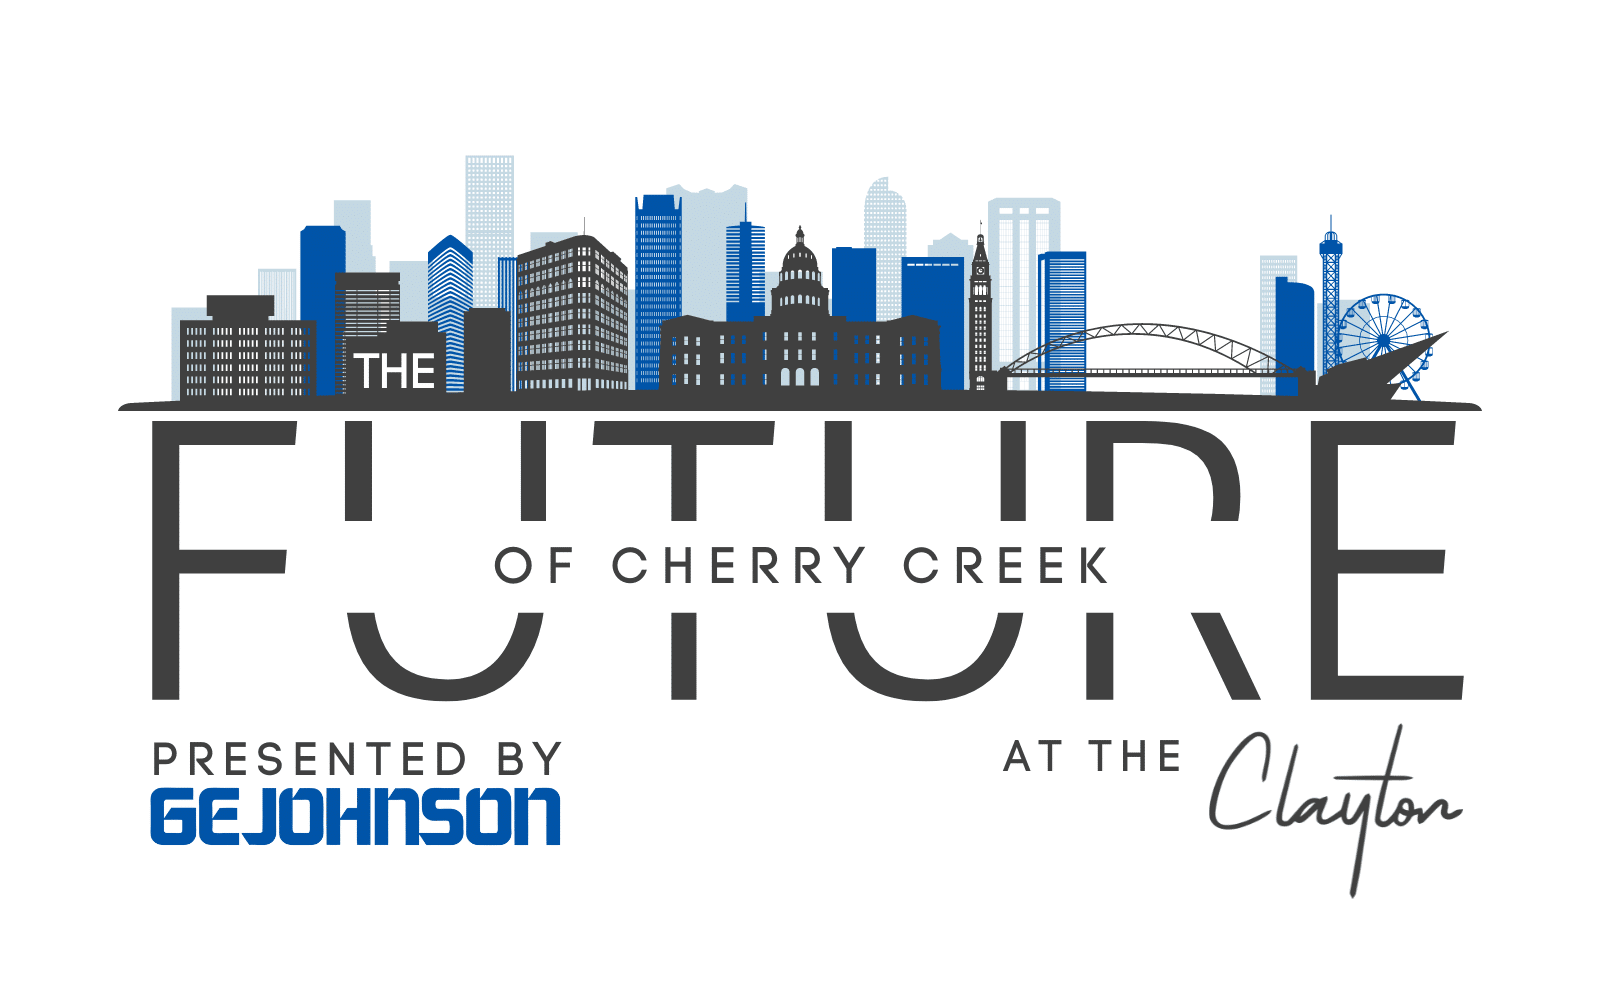 The Future Of Cherry Creek Logo